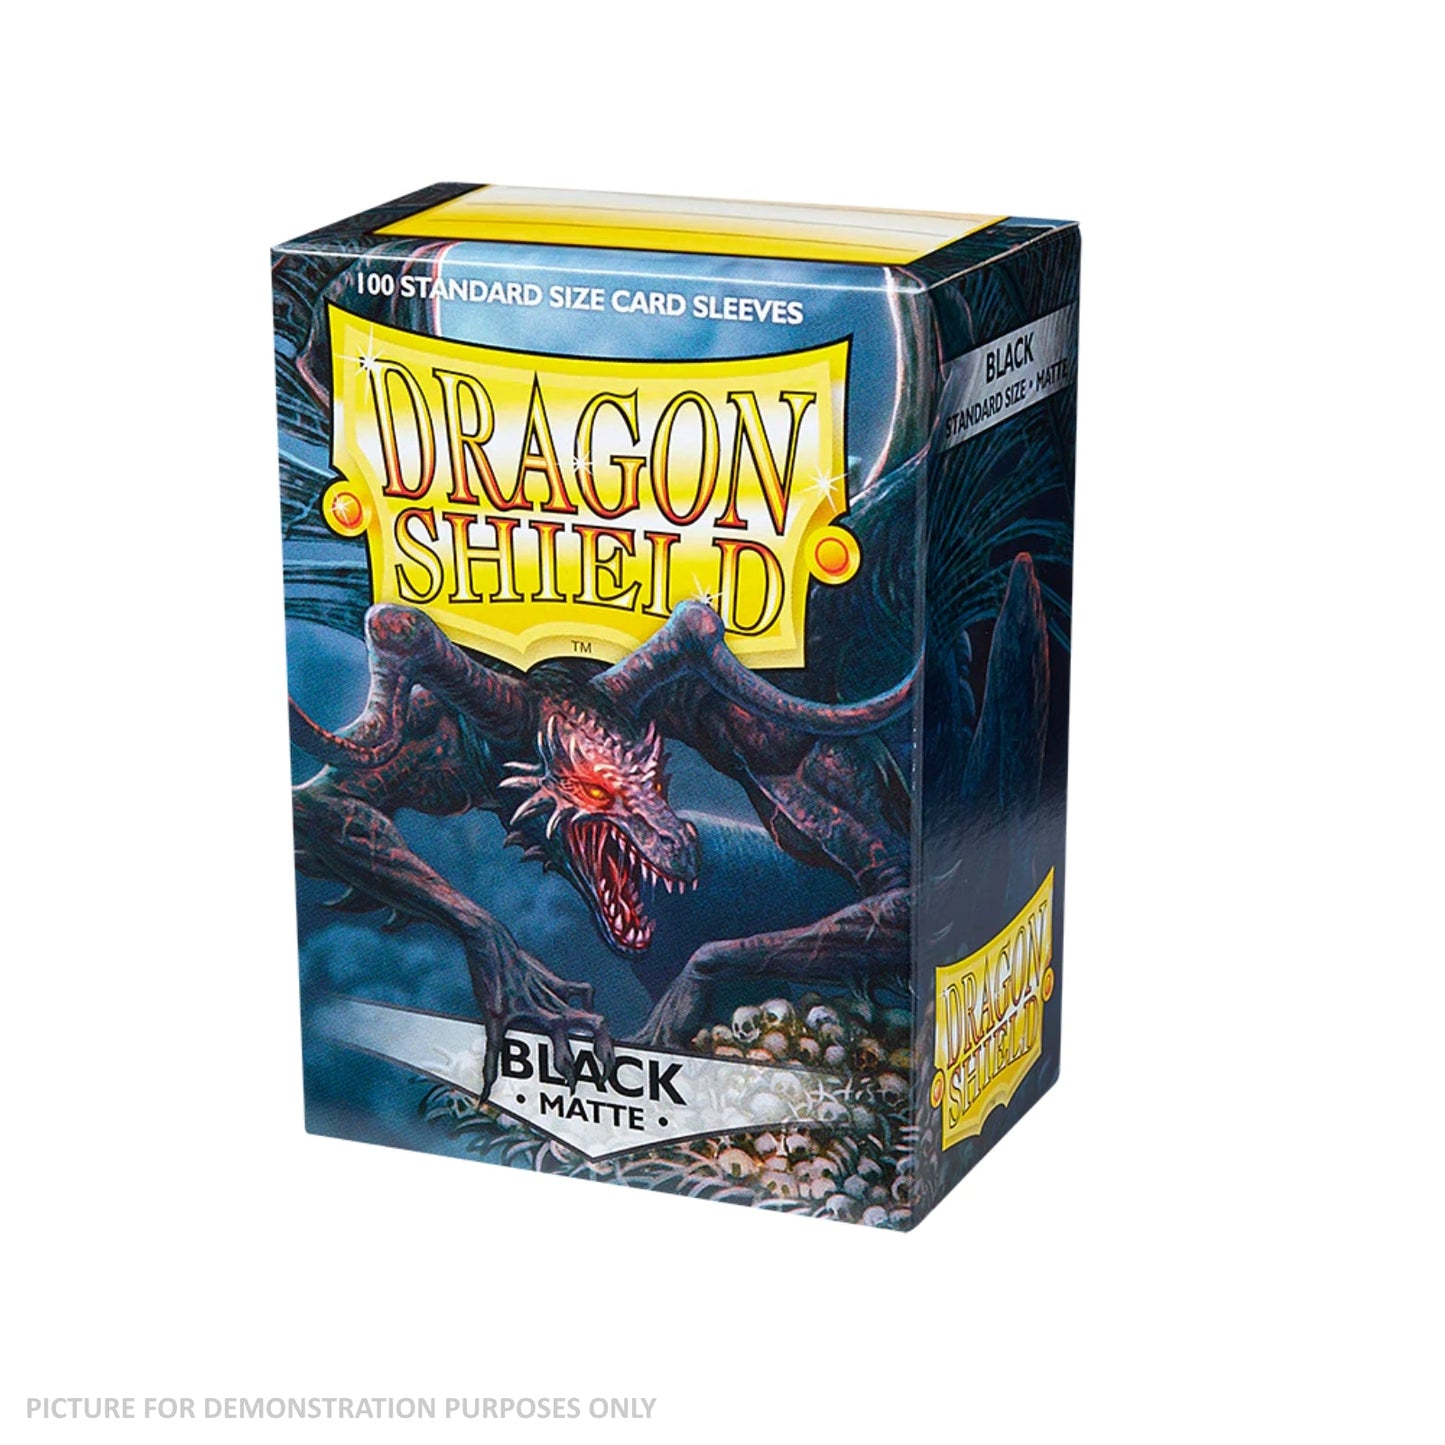 Dragon Shield 100 Standard Size Card Sleeves - Matte Black